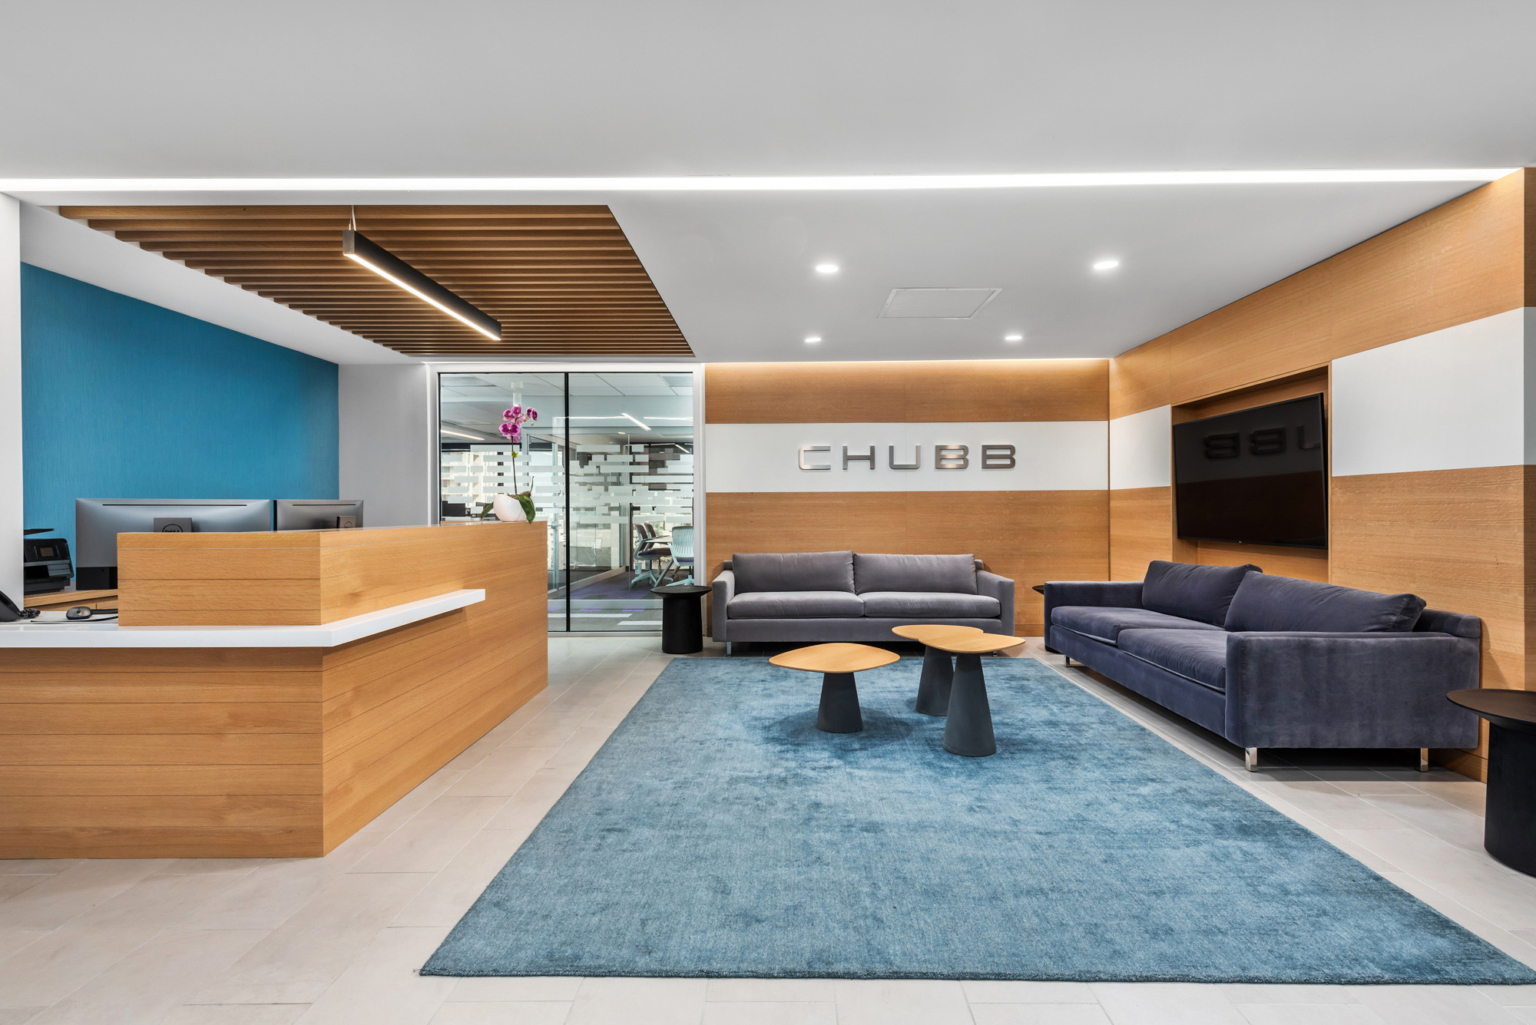 Chubb Insurance Offices - Miami | Office Snapshots